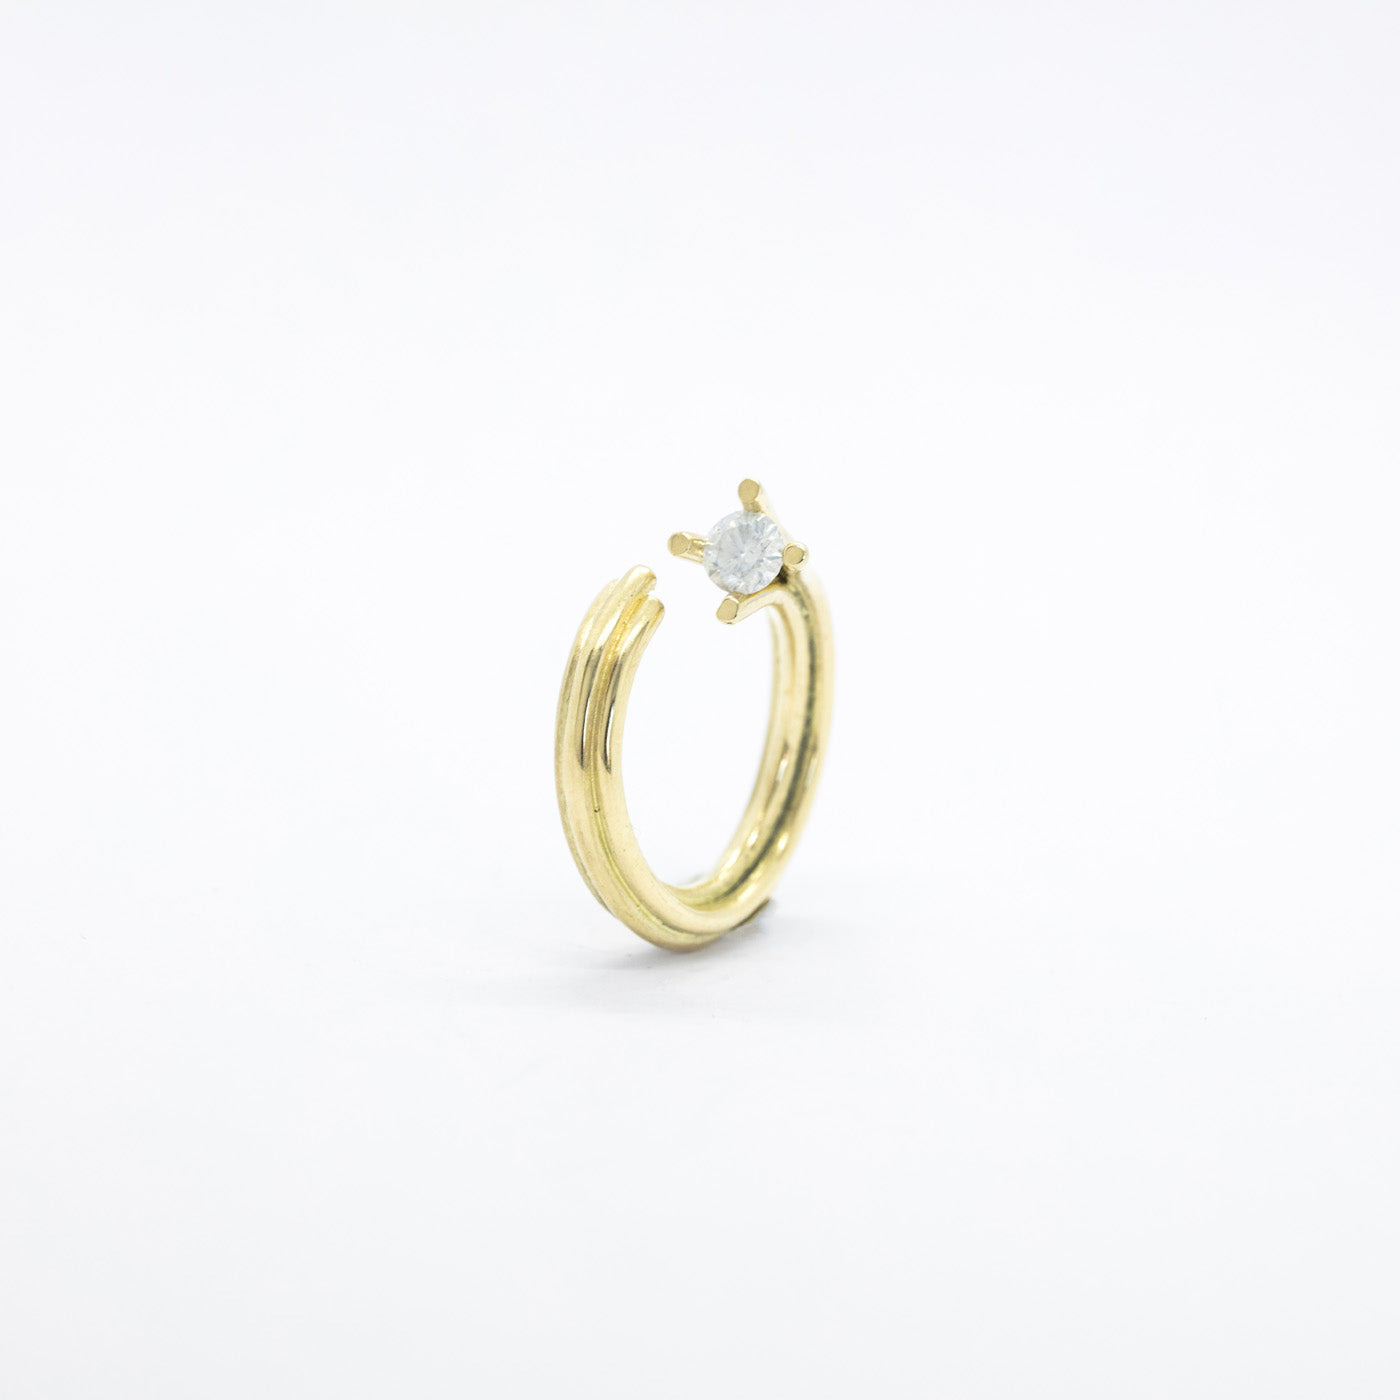 Ring Vortex 18 ct yellow gold 0.43 ct opalescent white diamond innan jewellery independent atelier berlin